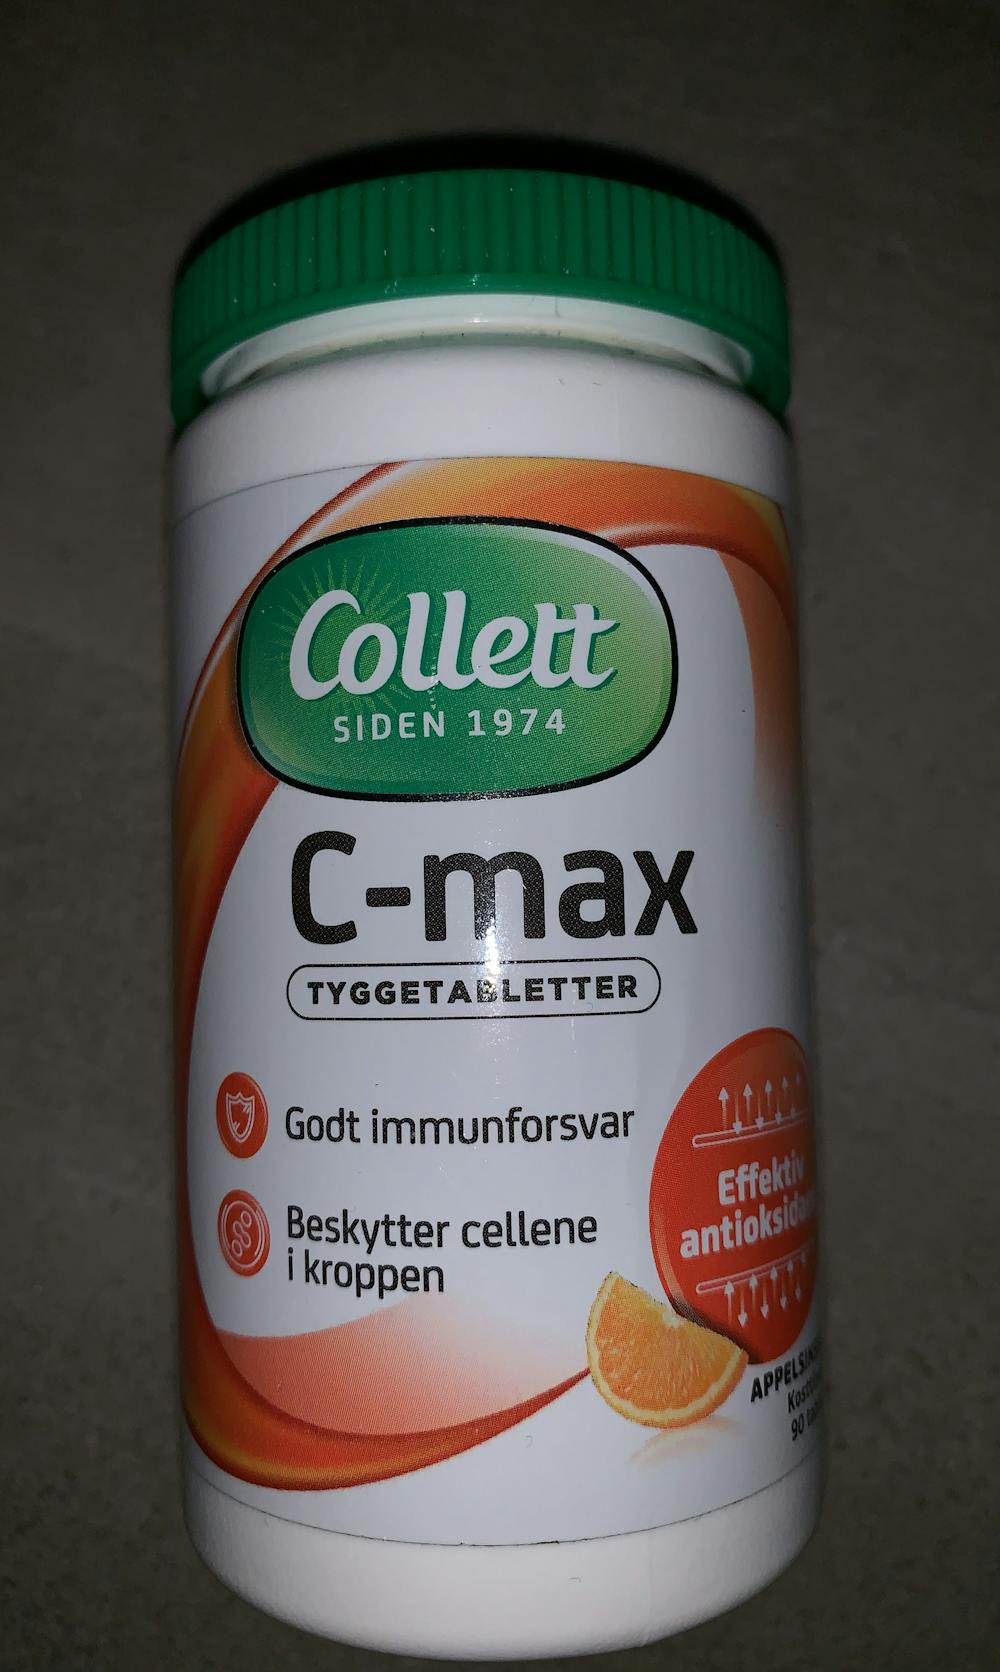 C-max tyggetabletter, Collett